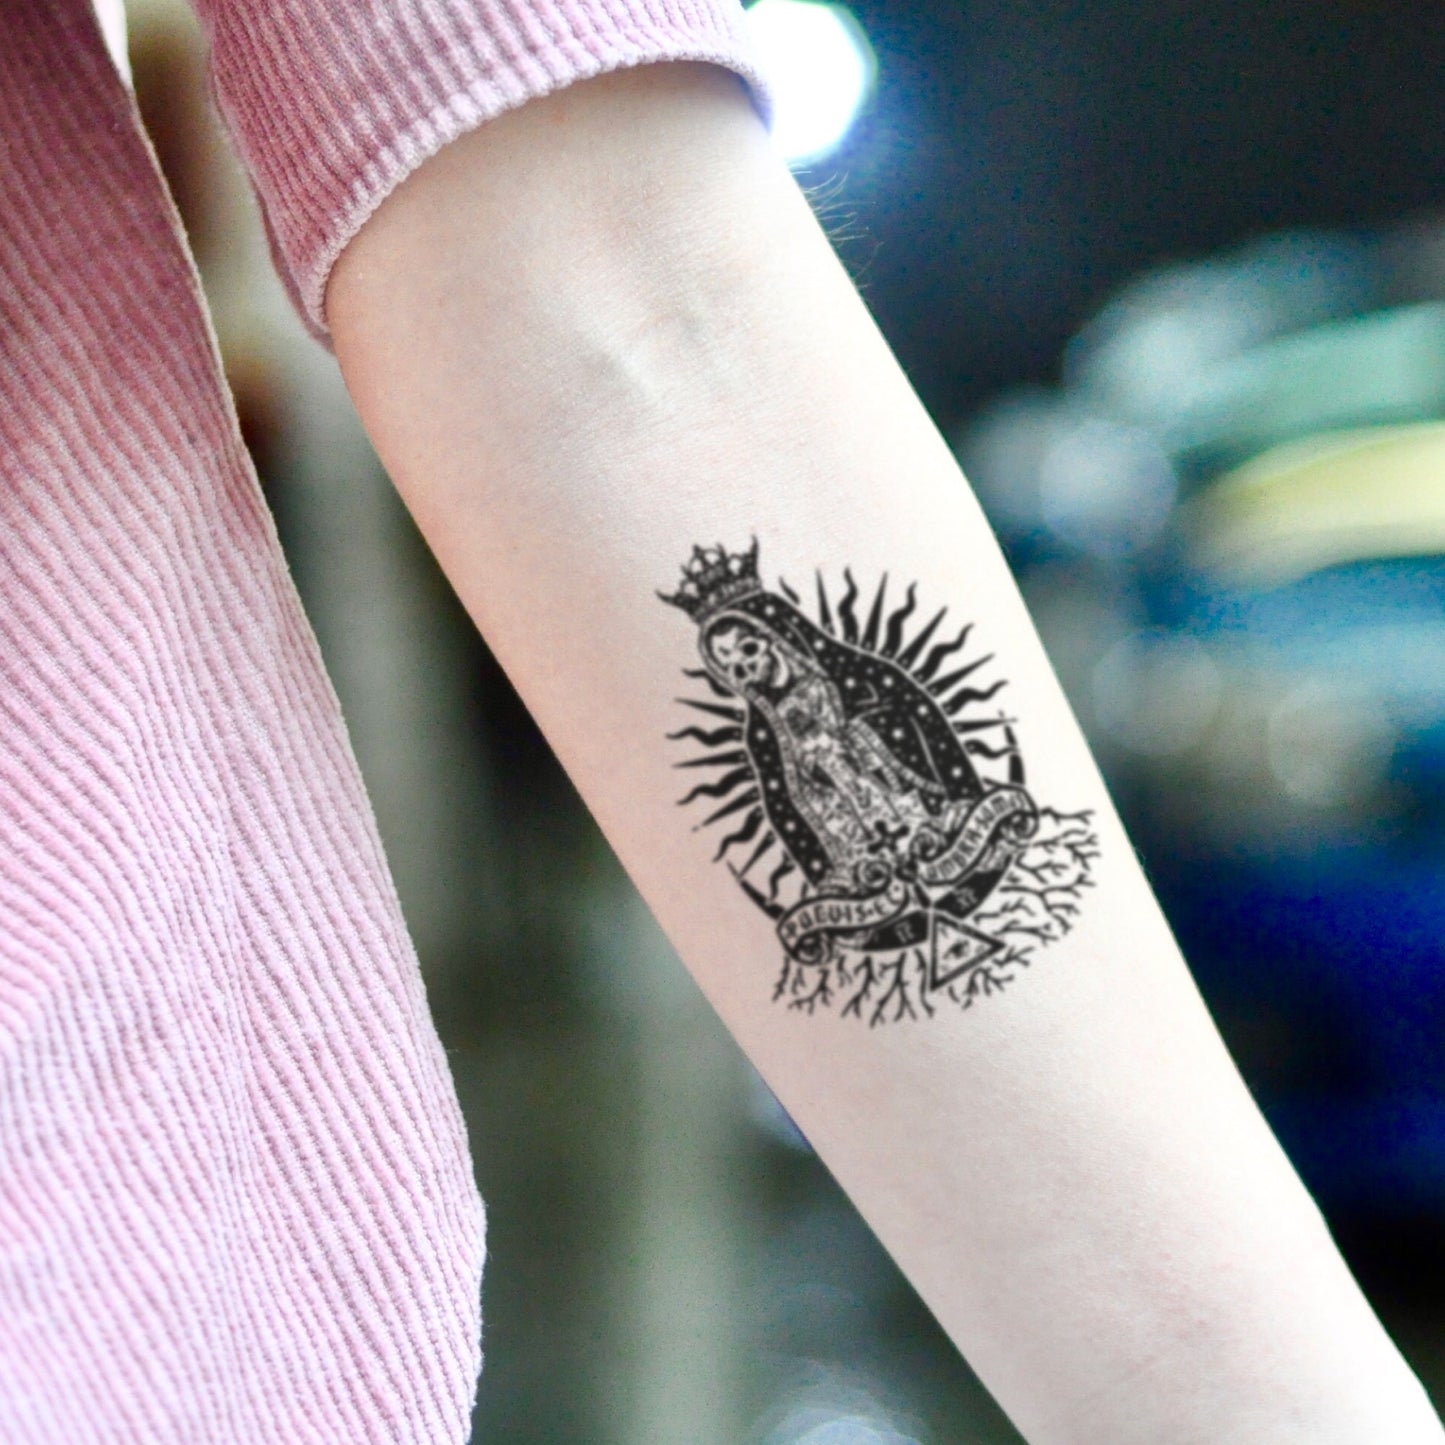 fake small santa muerte illustrative temporary tattoo sticker design idea on inner arm